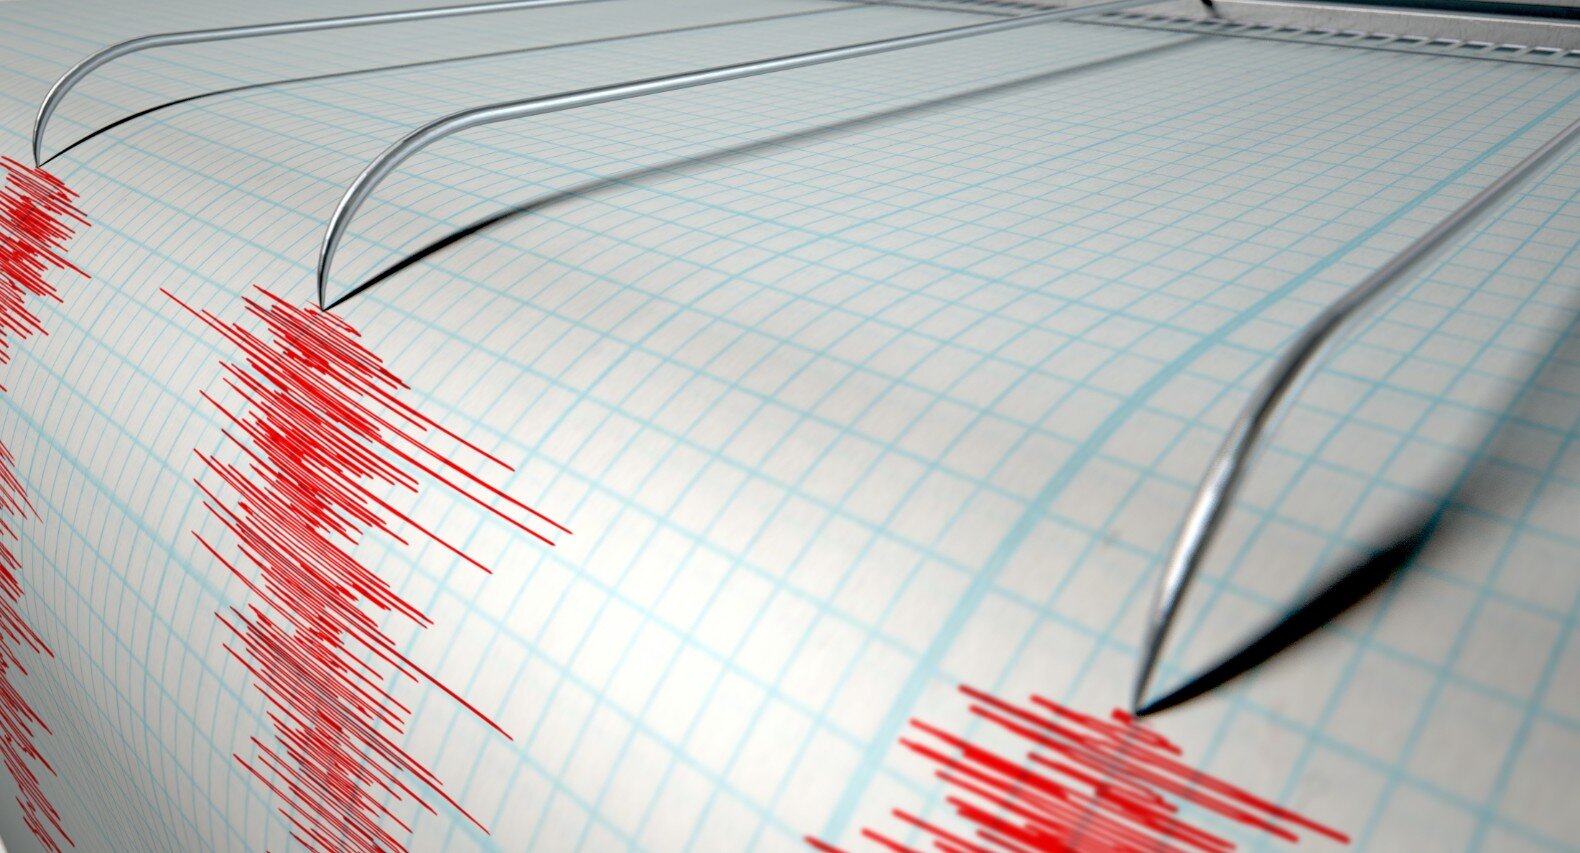 More information about "Ισχυρός σεισμός 5,6 Ρίχτερ στην Πάργα"